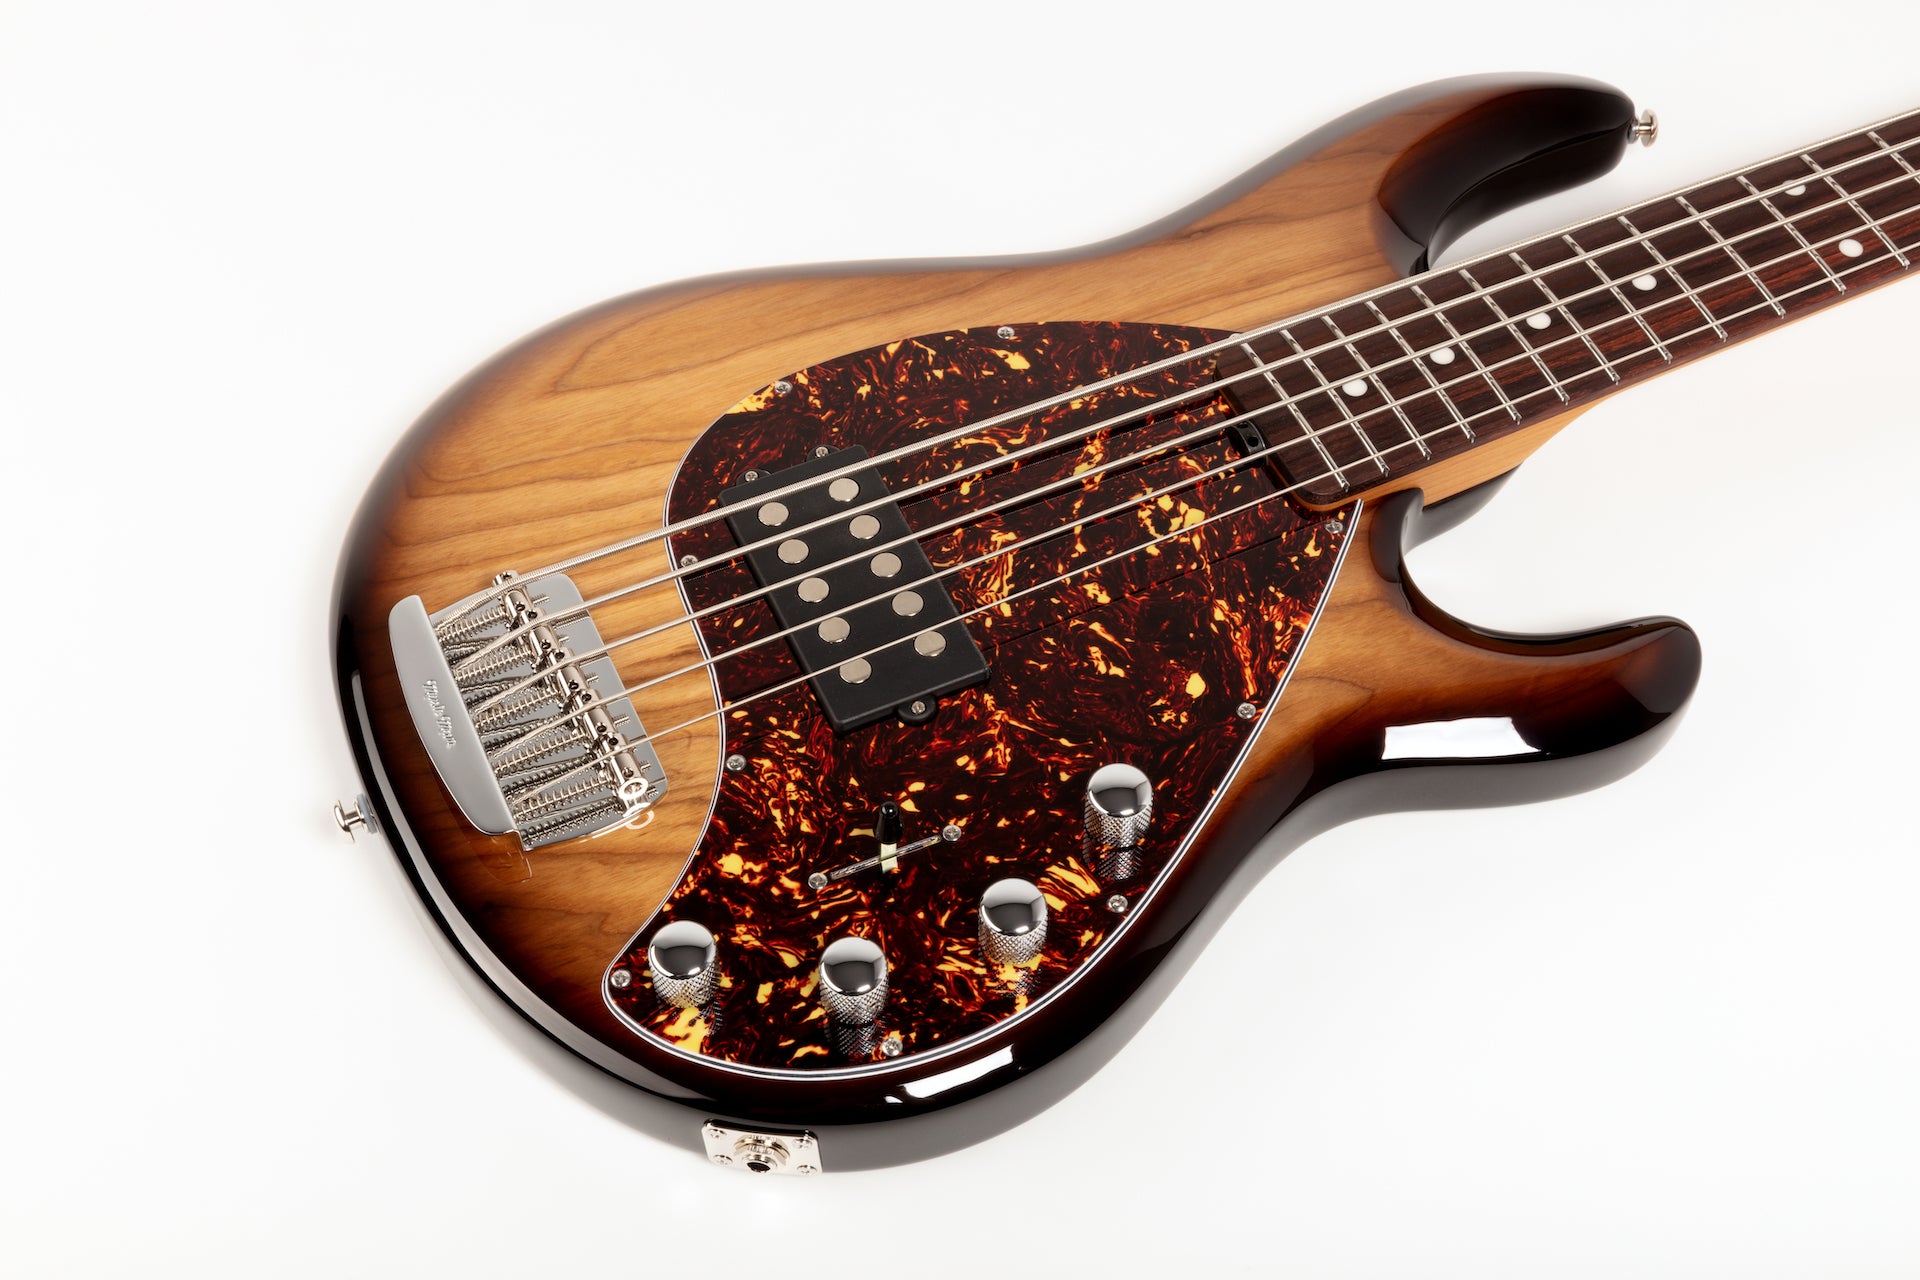 Ernie Ball Music Man StingRay Special 5 Bass Guitar - Burnt Ends with Rosewood Fingerboard F95728 - HIENDGUITAR   Musicman bass